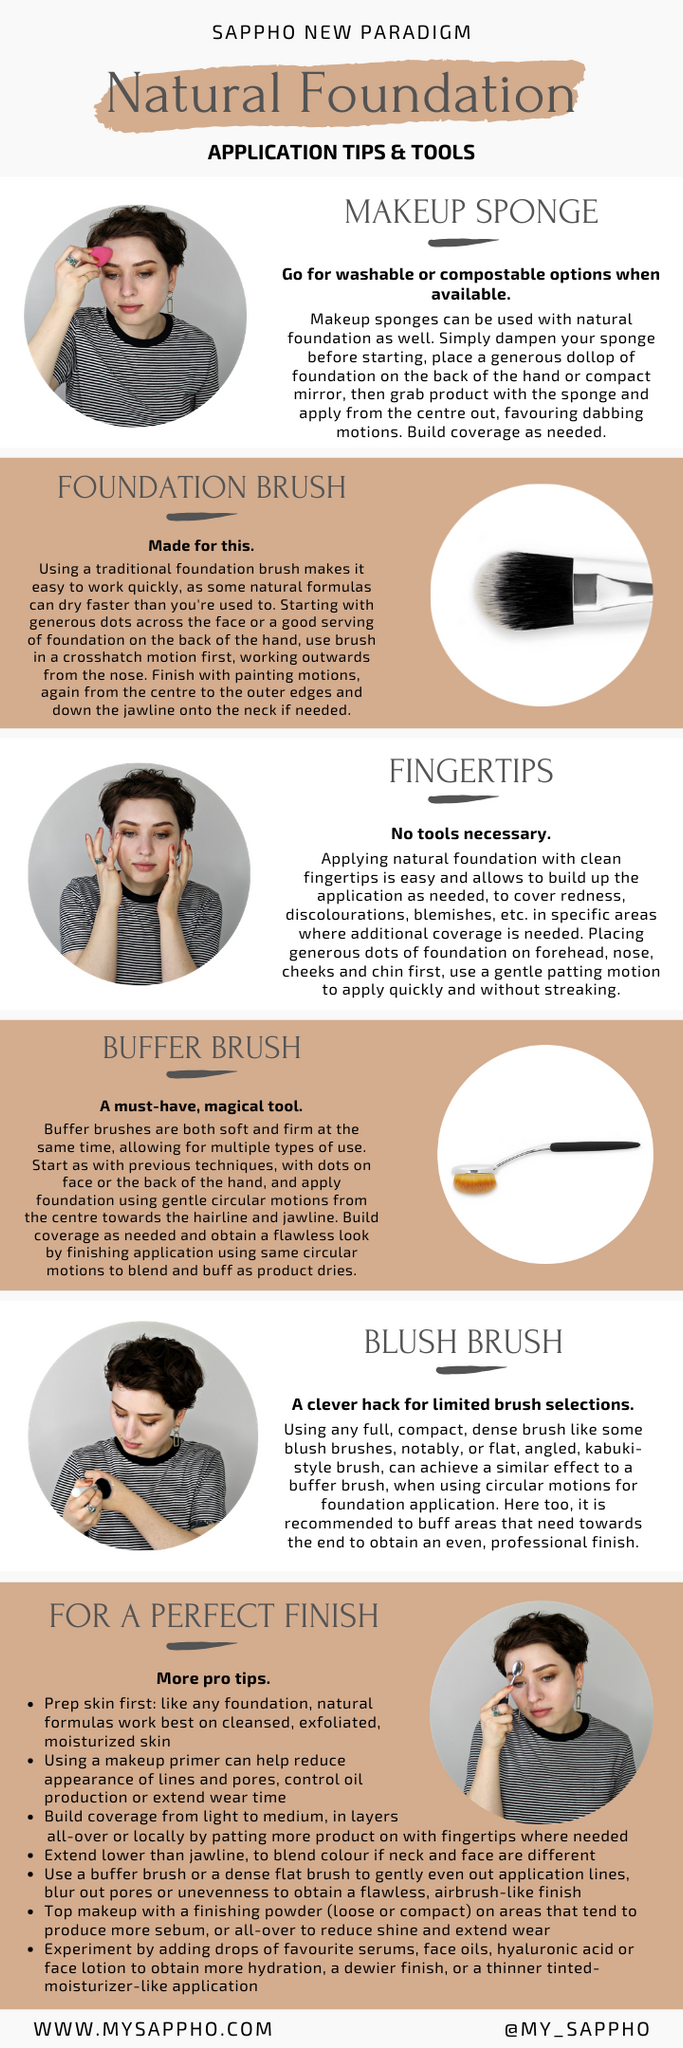 Pro makeup artist tips for natural foundation application